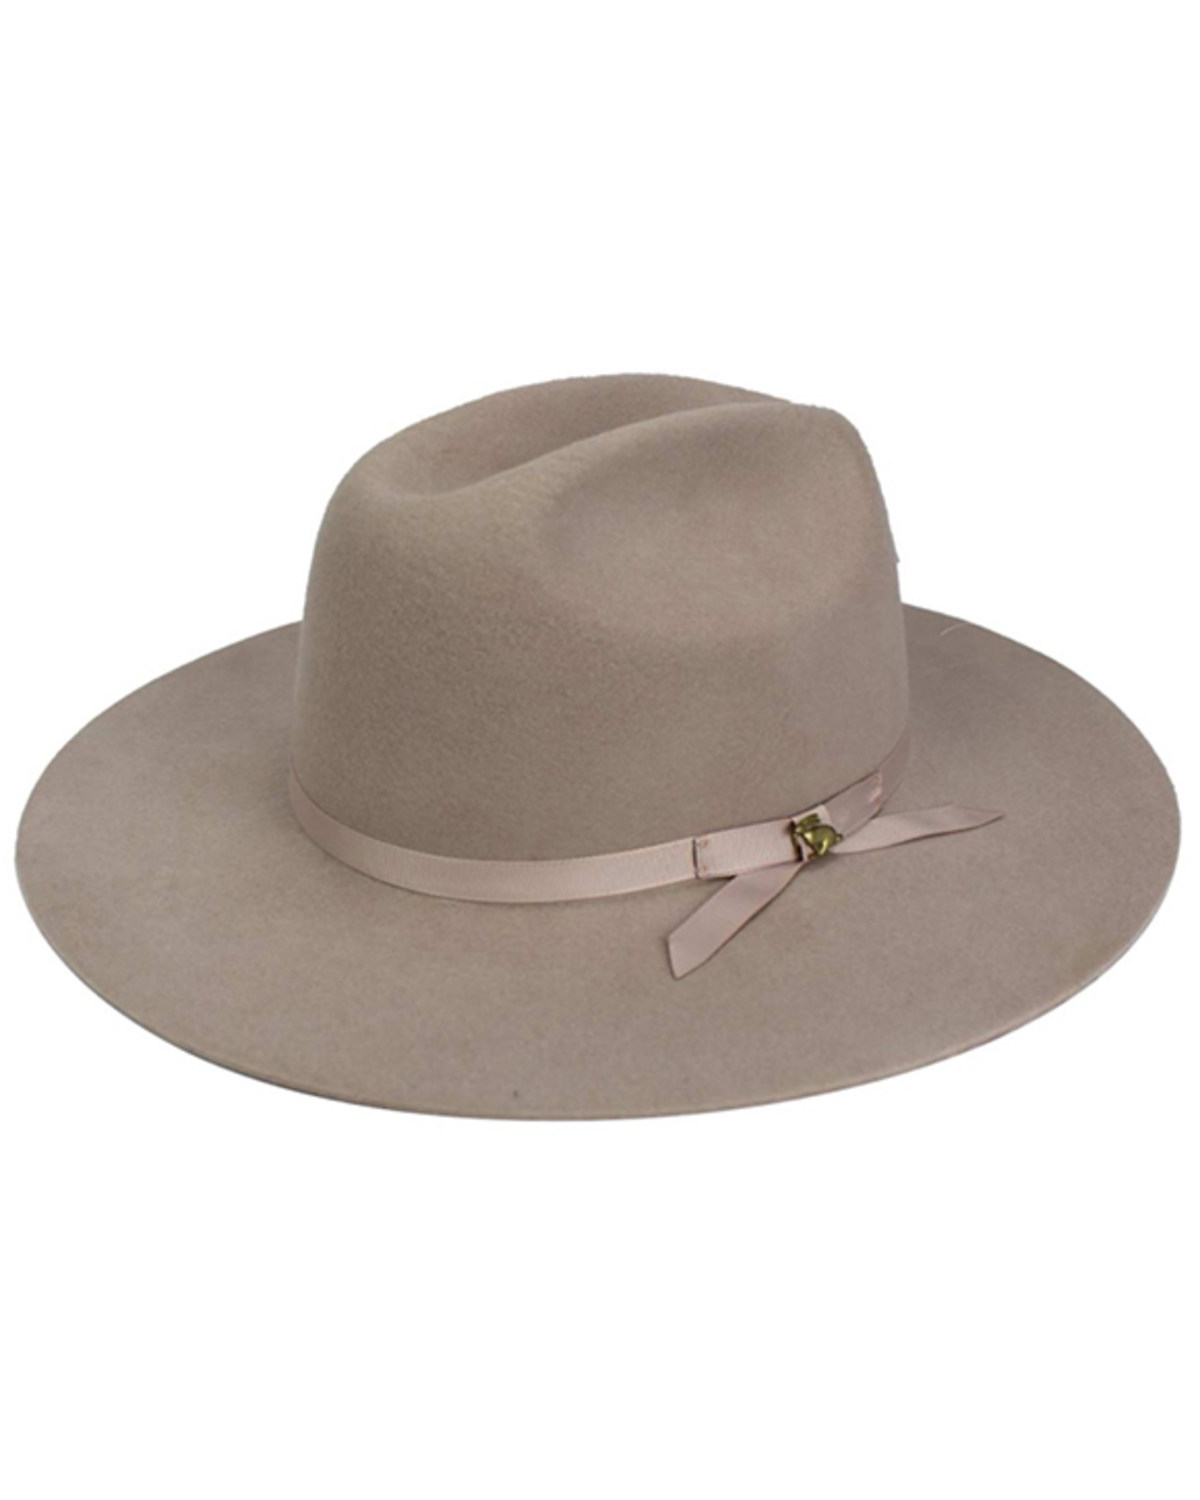 Peter Grimm Men's Bolden Western Fashion Hat